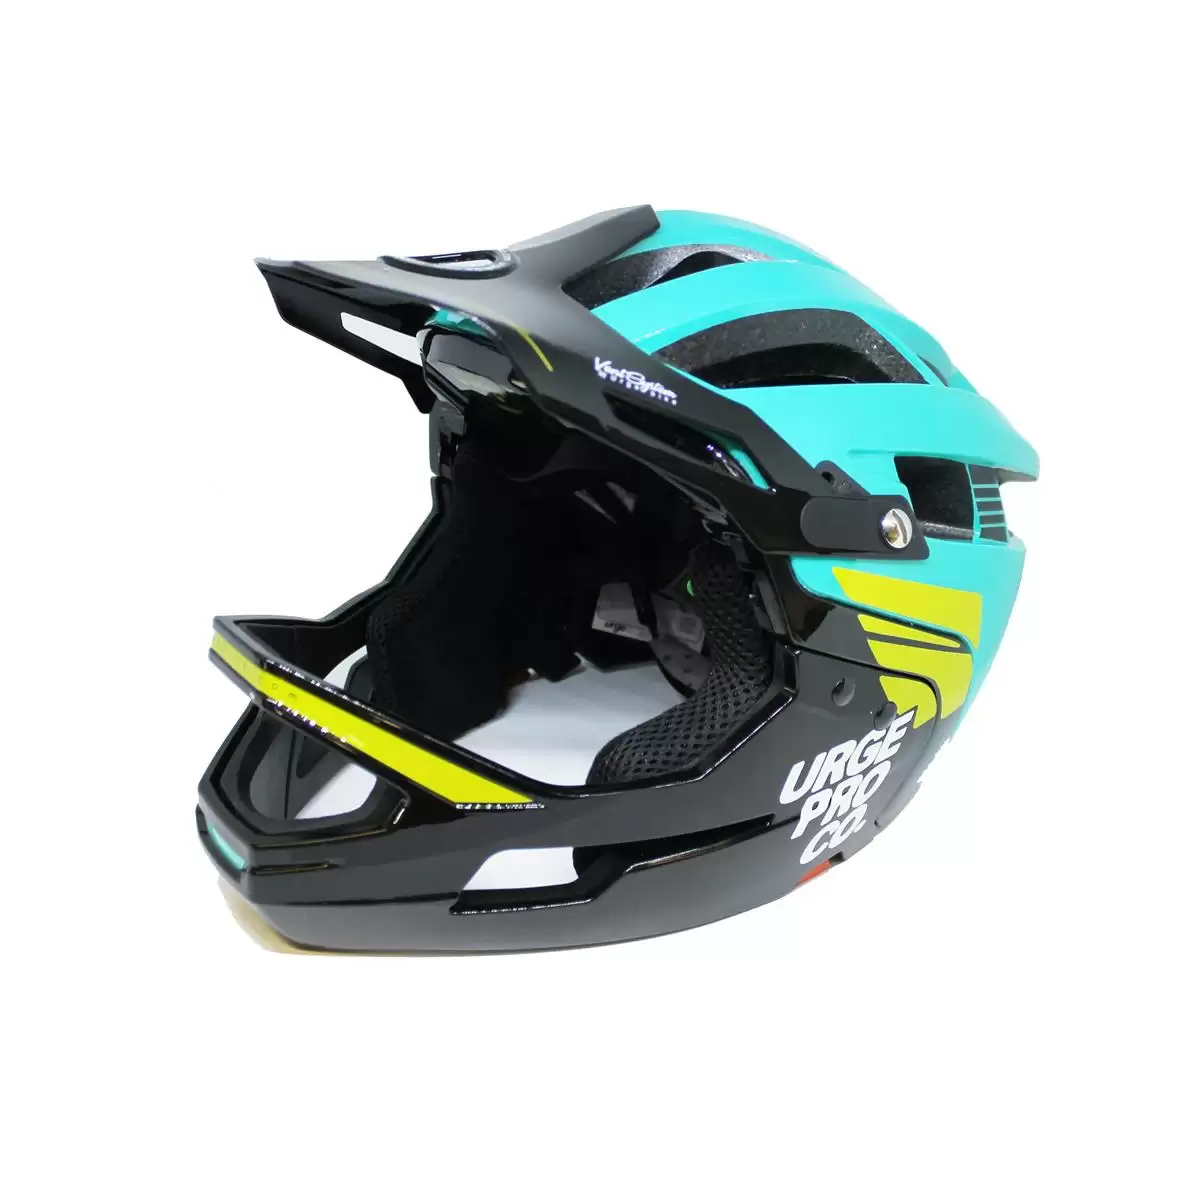 Full face helmet Gringo de la Pampa light blue size S/M (55-58) #2